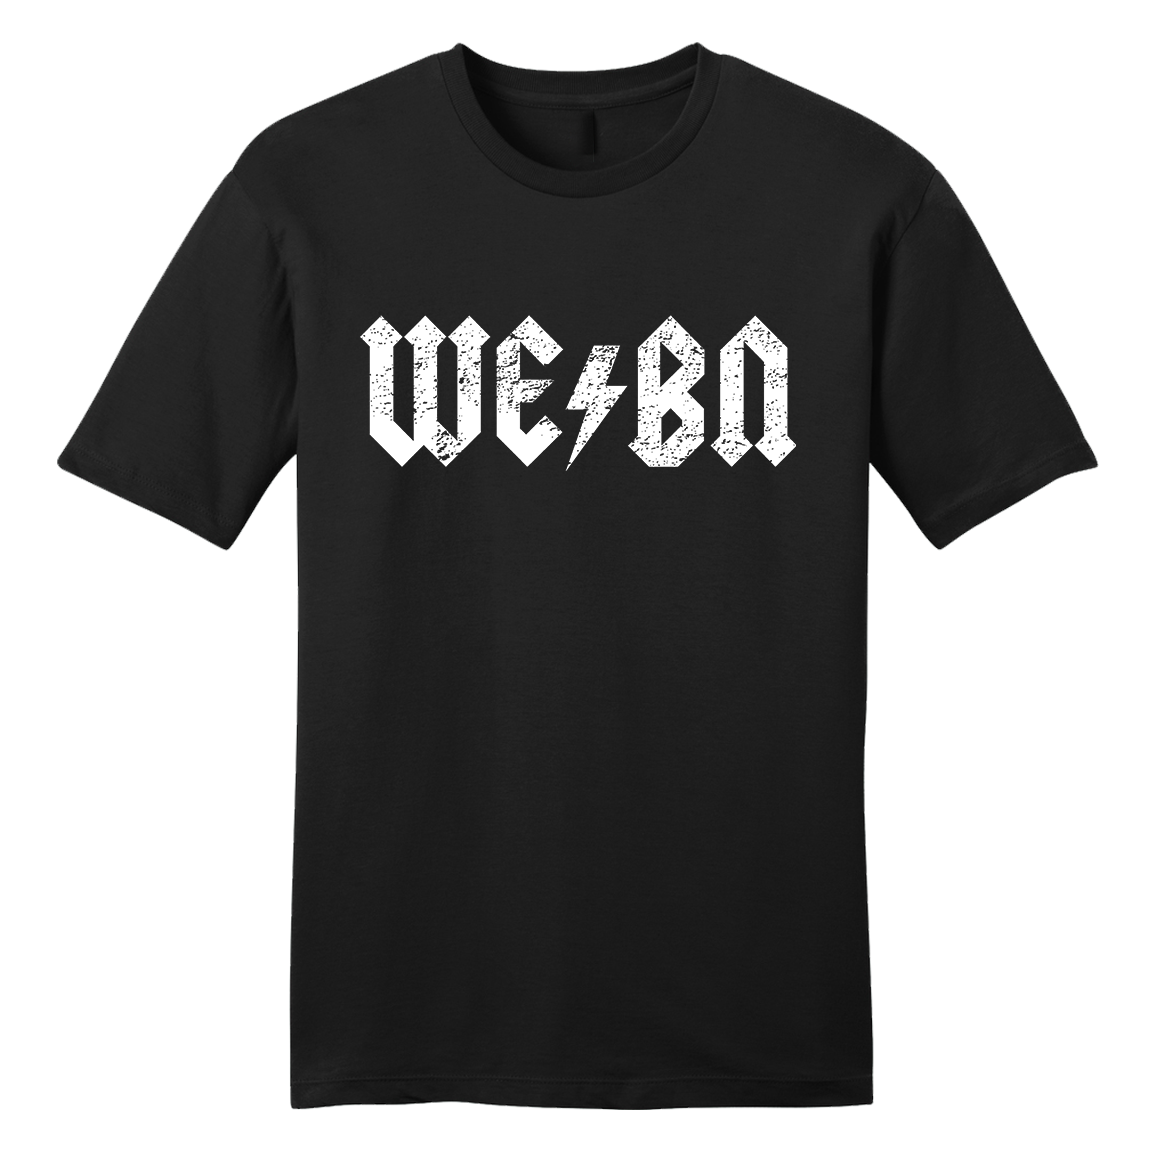 WEBN Rock Band Logo - Cincy Shirts